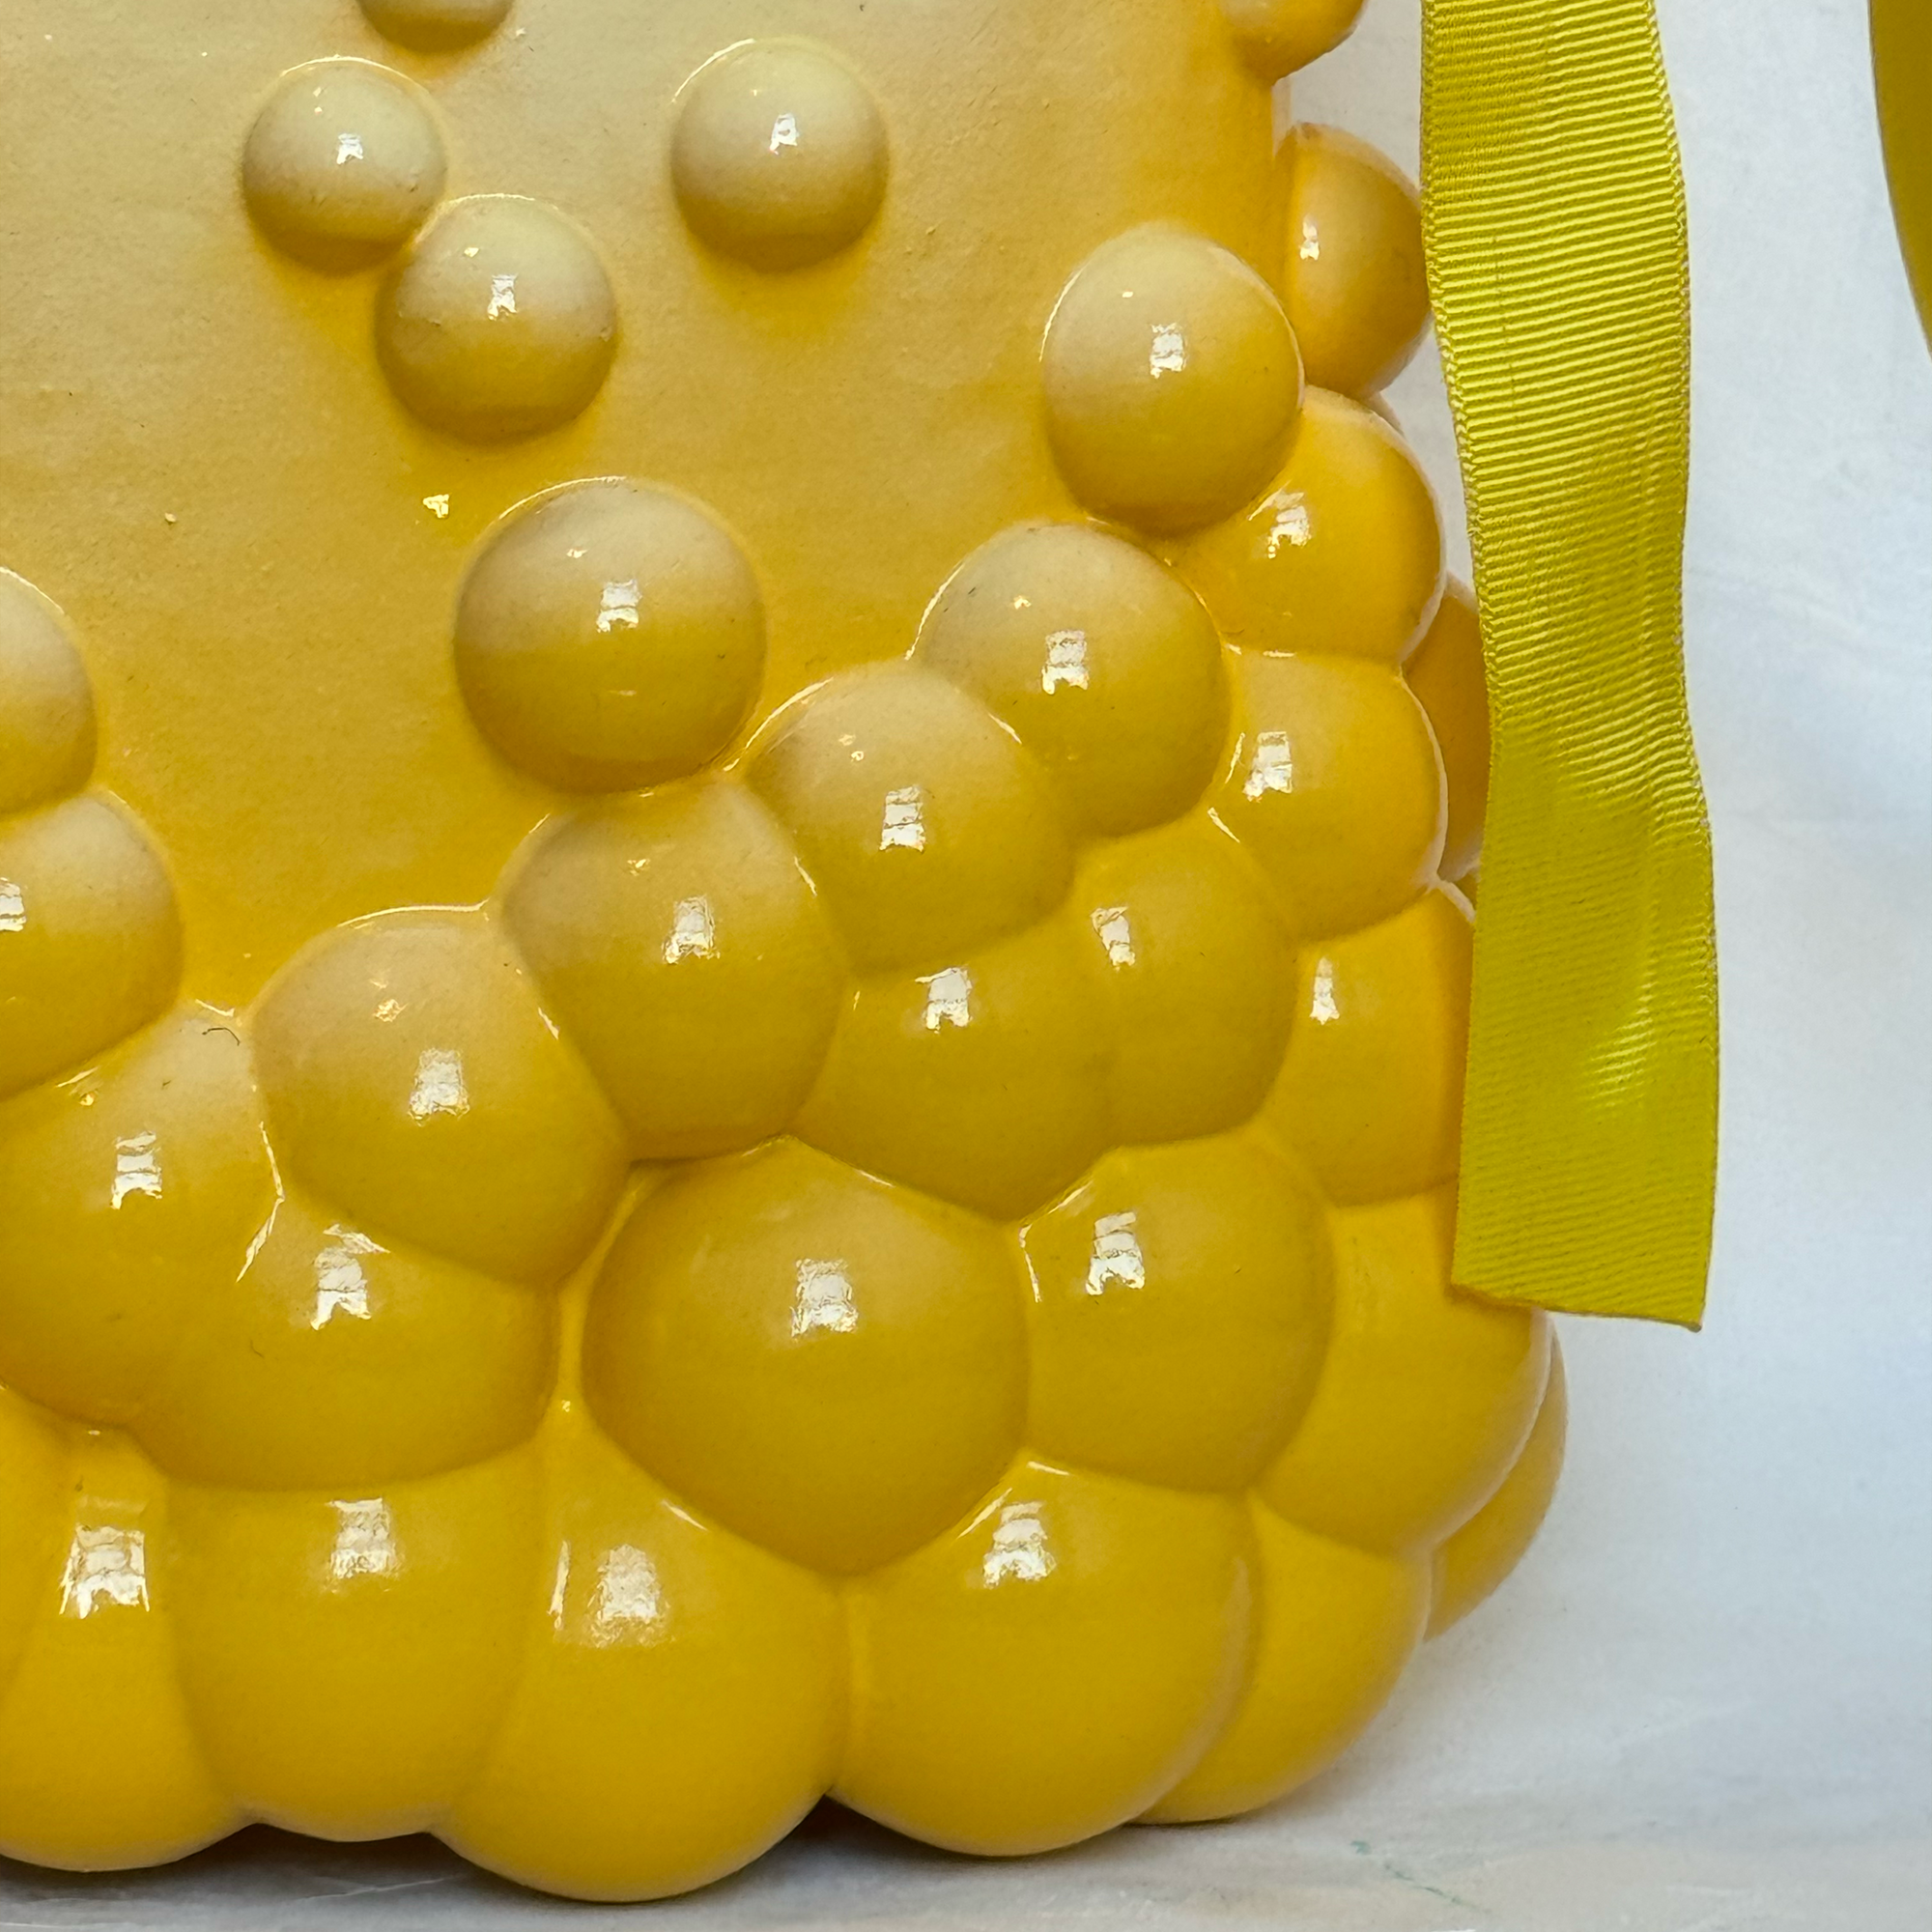 Grace Scharf Design BuBu Bag - Yellow - Large